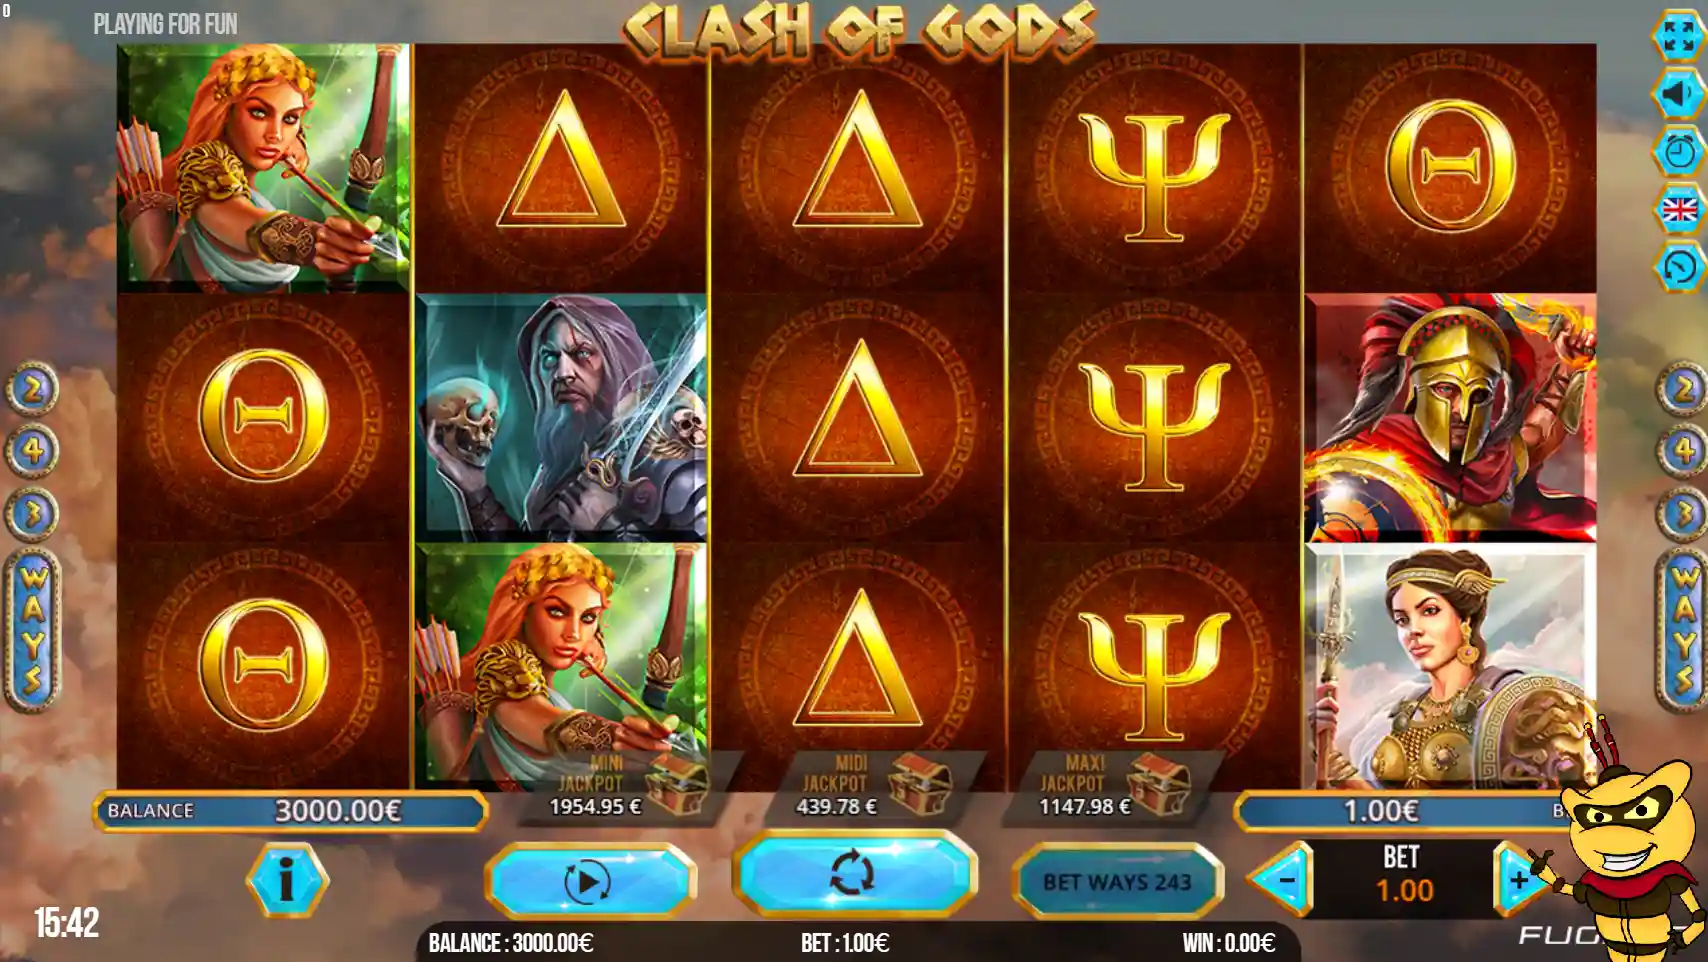 Clash of Gods gameplay og design
